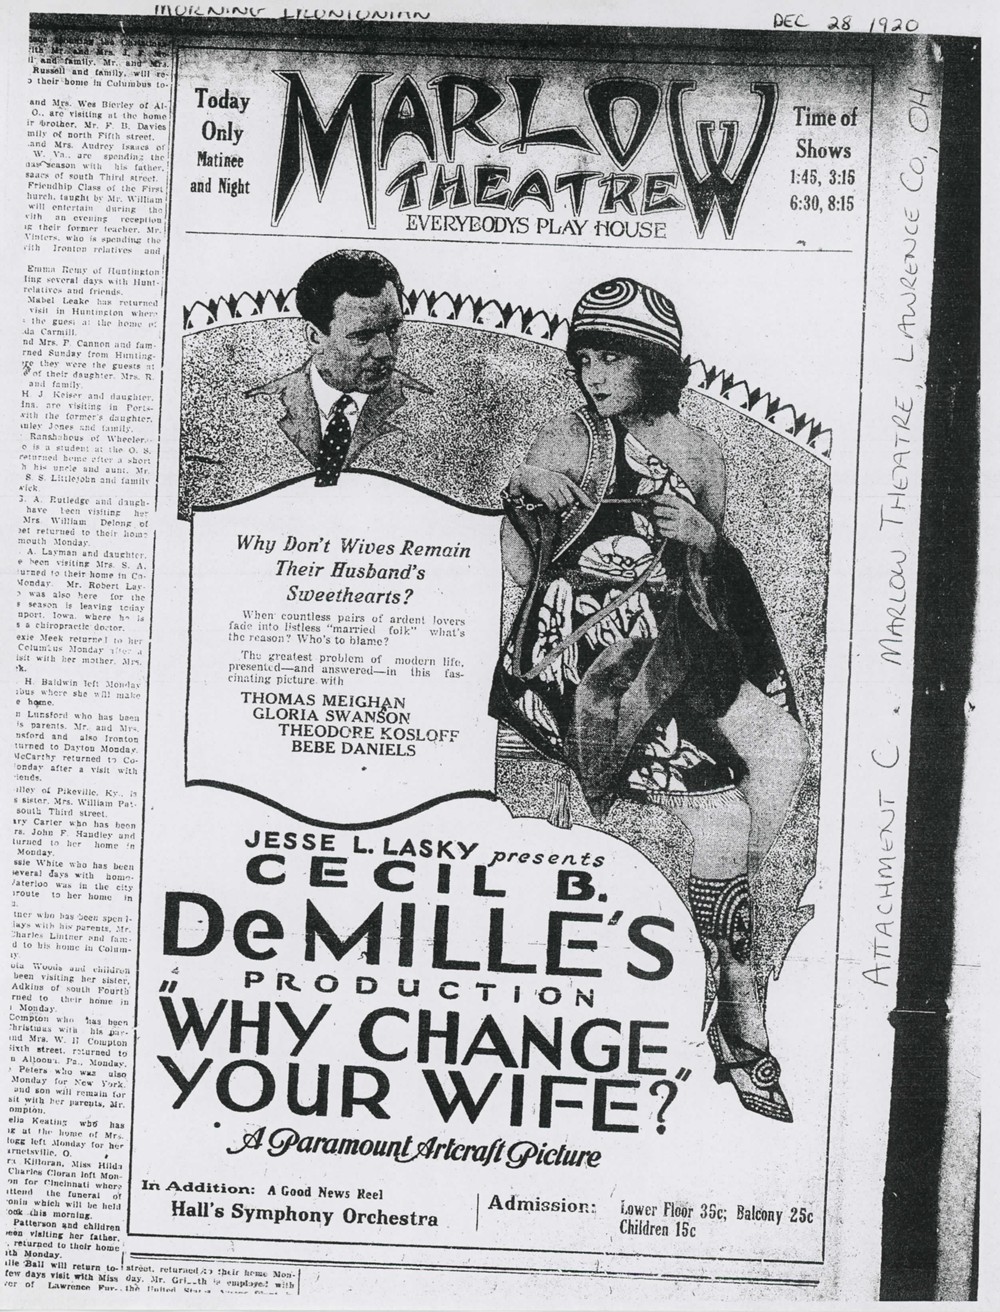 Marlow Theater, Ironton Ohio Newspaper ad (1920)